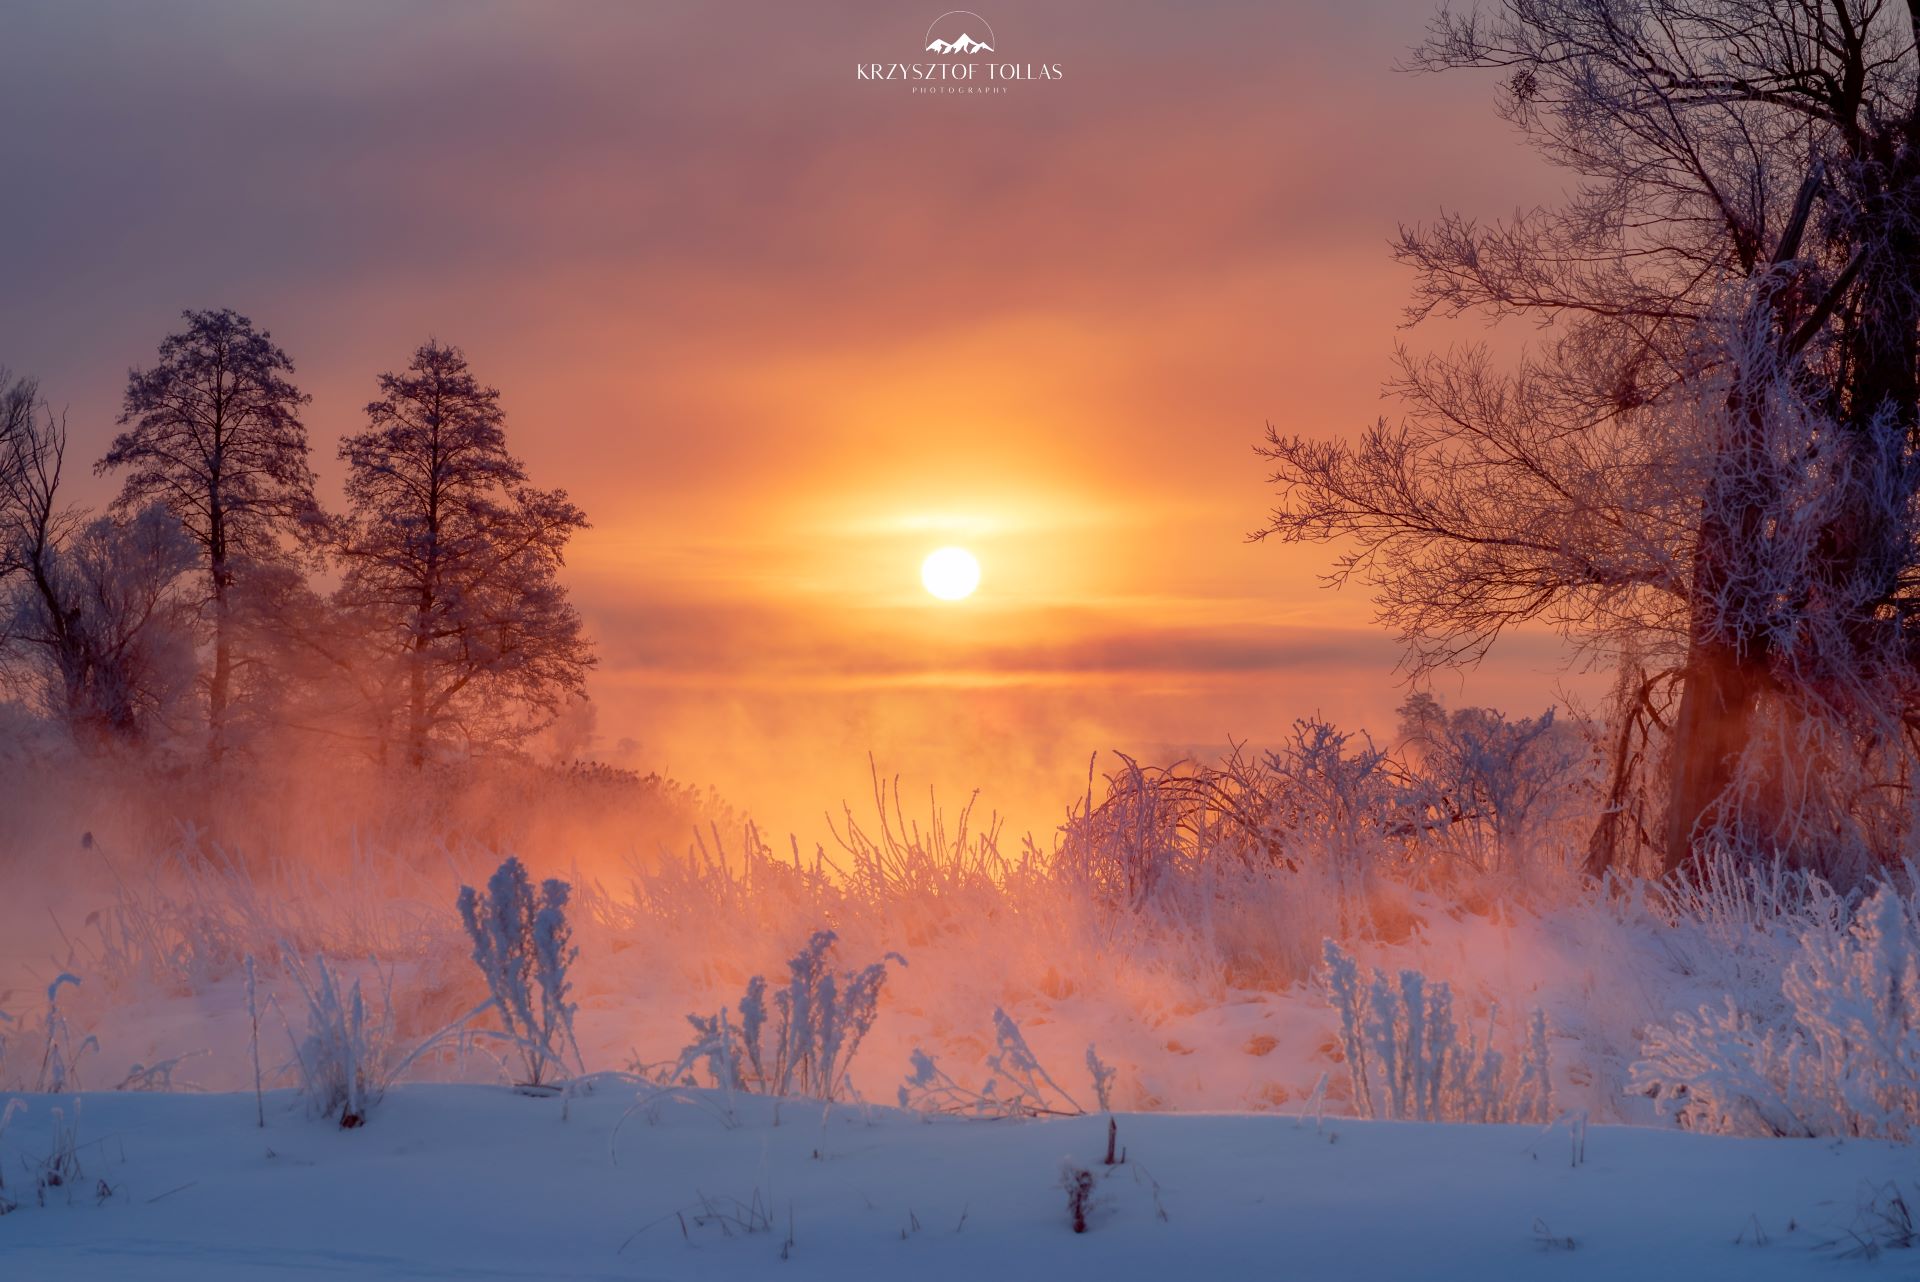 Winter 2021  snow  sunrise  frost  dawn  river  Gwda  landscape  nature  sun  sky  clouds  light  trees  nikon D750  atmosphere  longing  sad  memory, Krzysztof Tollas